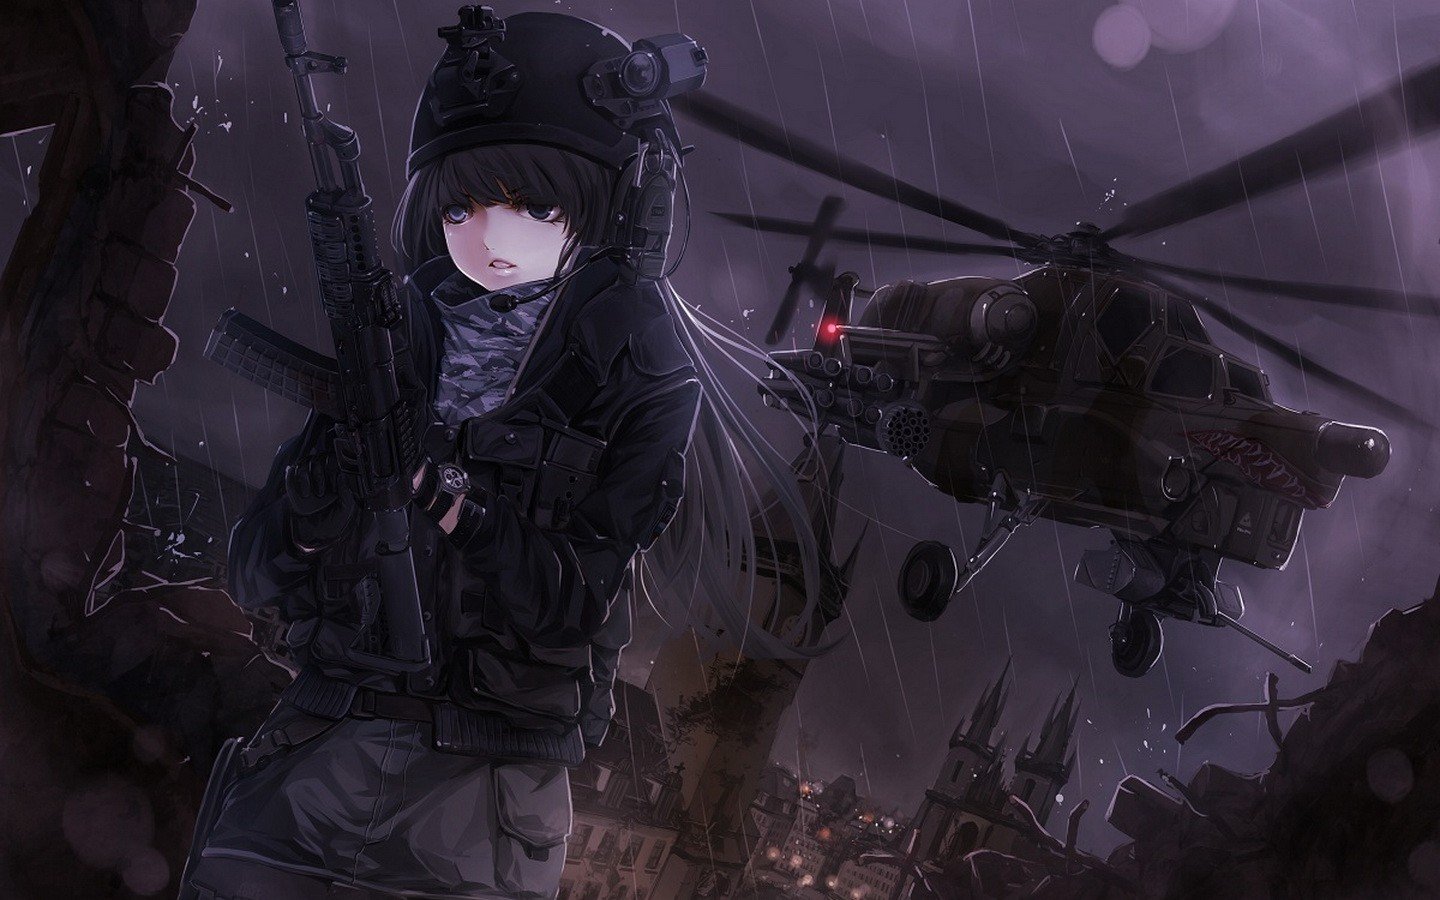 headphones Rifles Soldiers Video Games Guns Cityscapes Dark